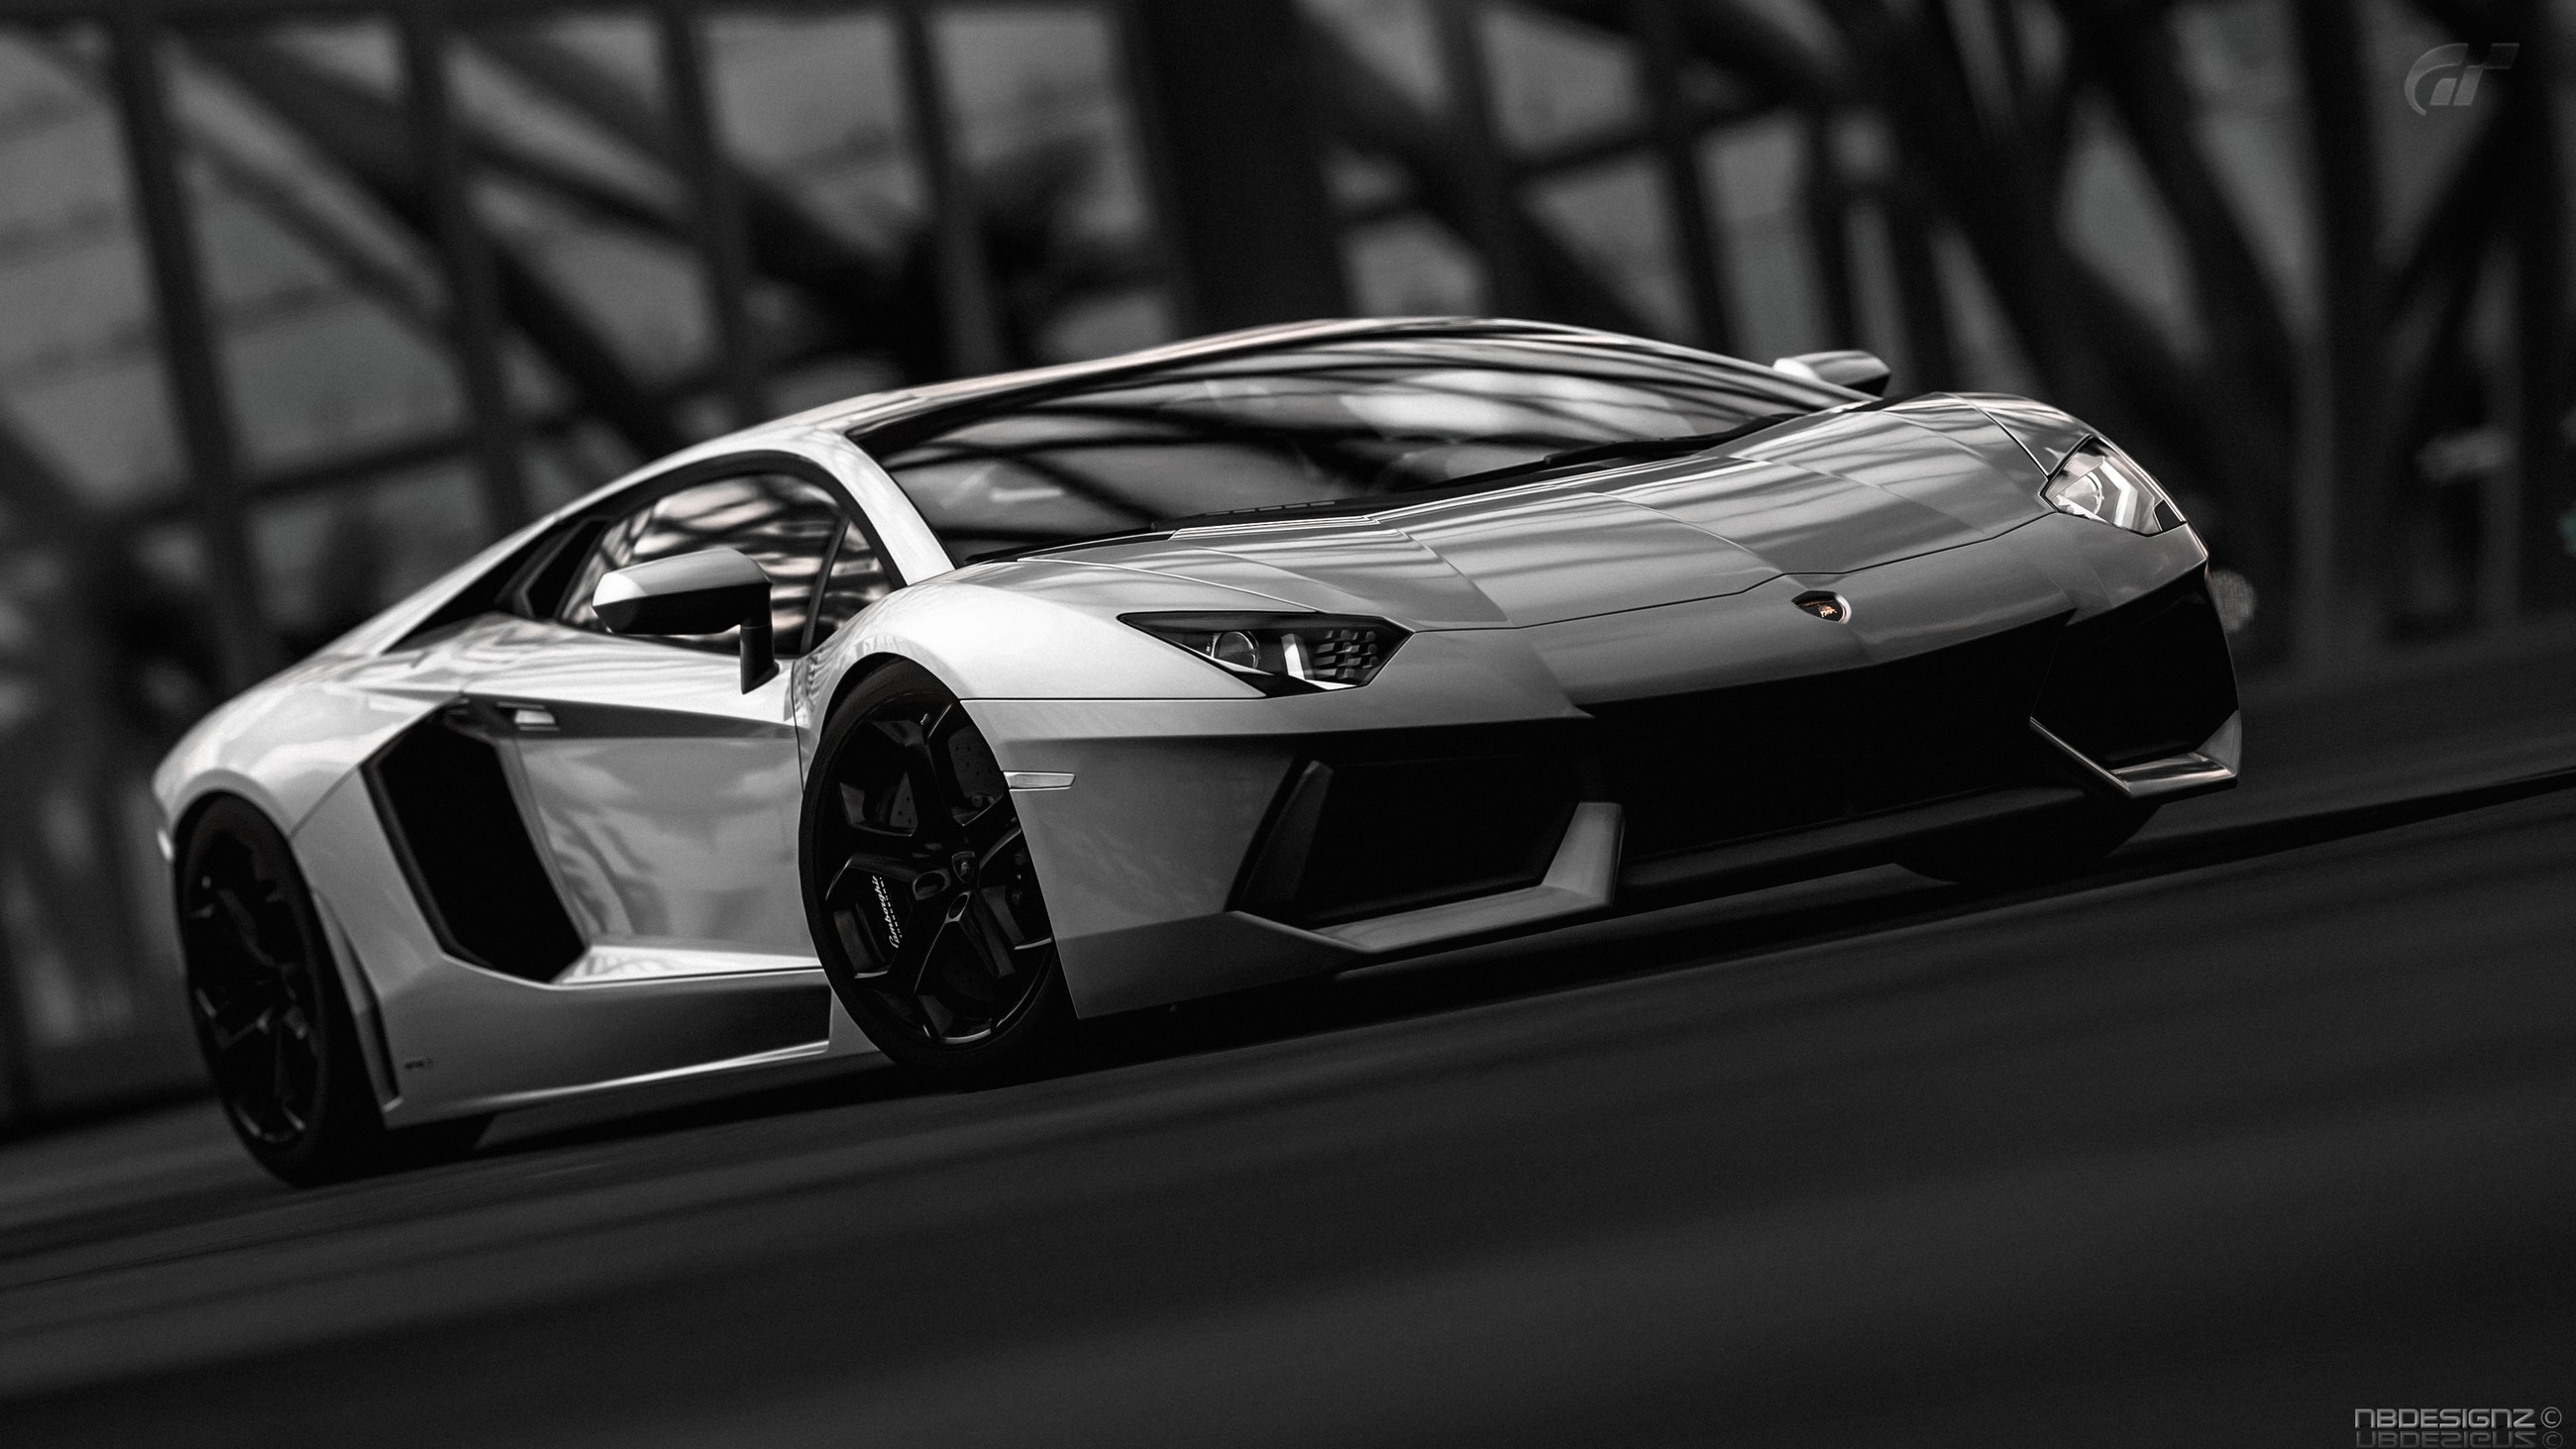 HD desktop wallpaper: Car, Bridge, Gran Turismo, Race, Video Game, Gran  Turismo 5 download free picture #428179